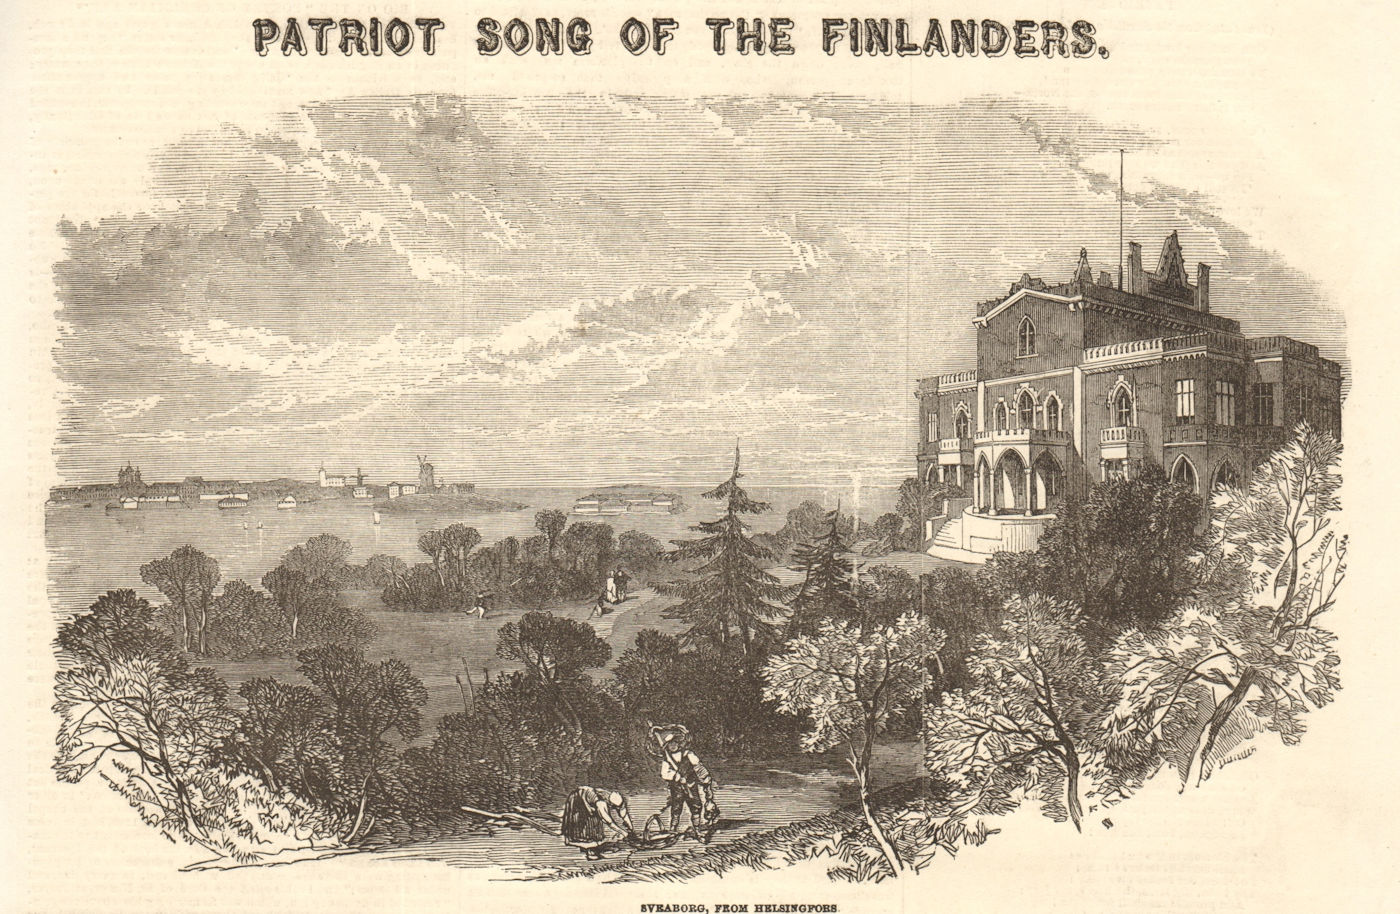 Patriot song of the Finlanders: Sveaborg (Suomenlinna) from Helsinki 1854